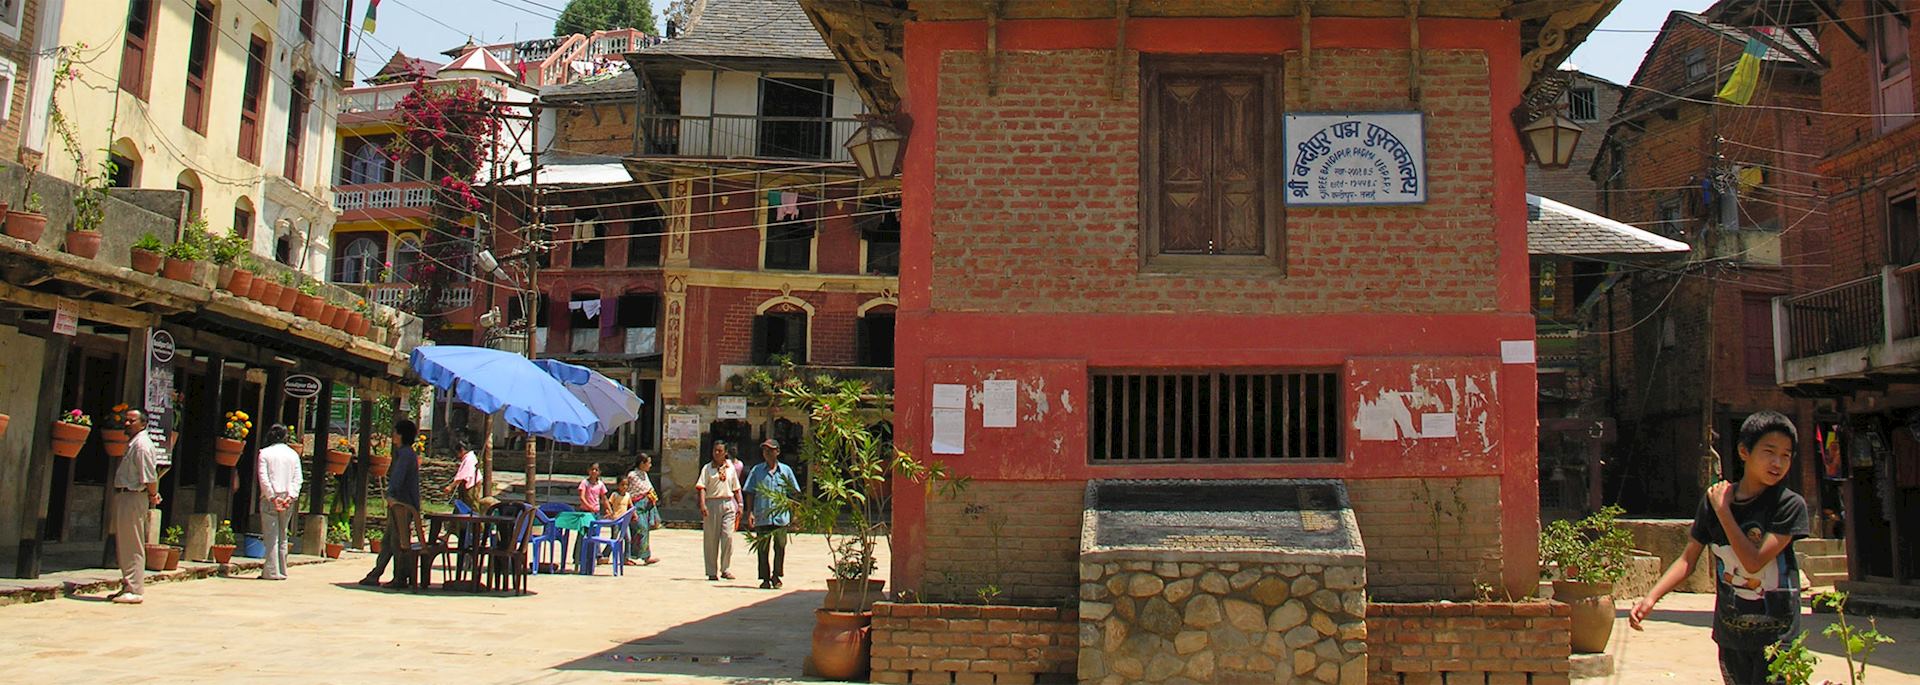 Main street in Bandipur, Nepal